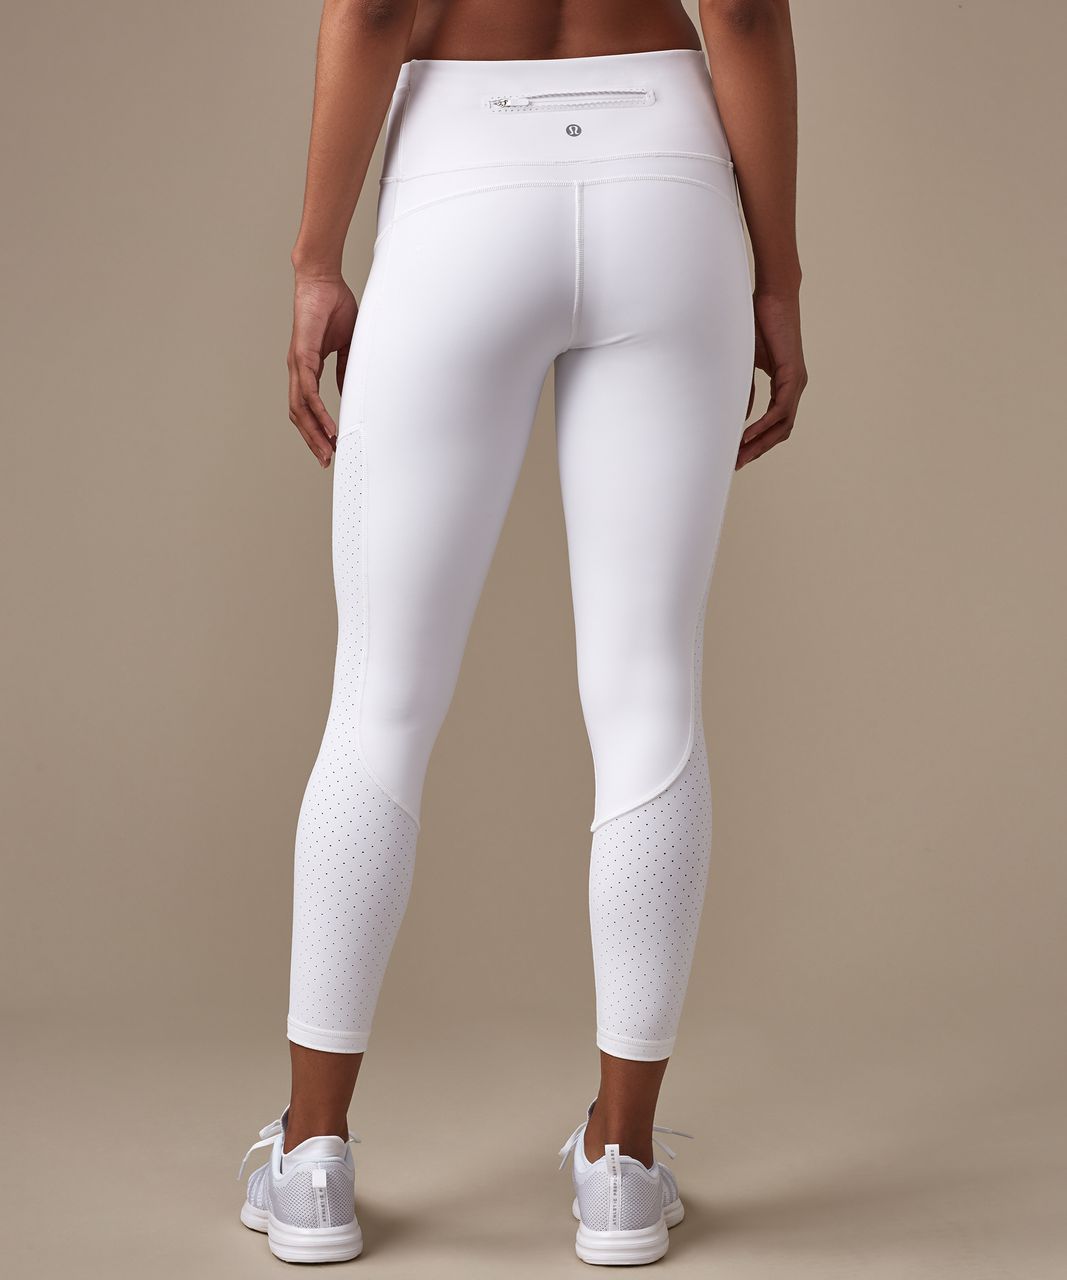 lulu lemon white pants, OFF 72%,Buy!